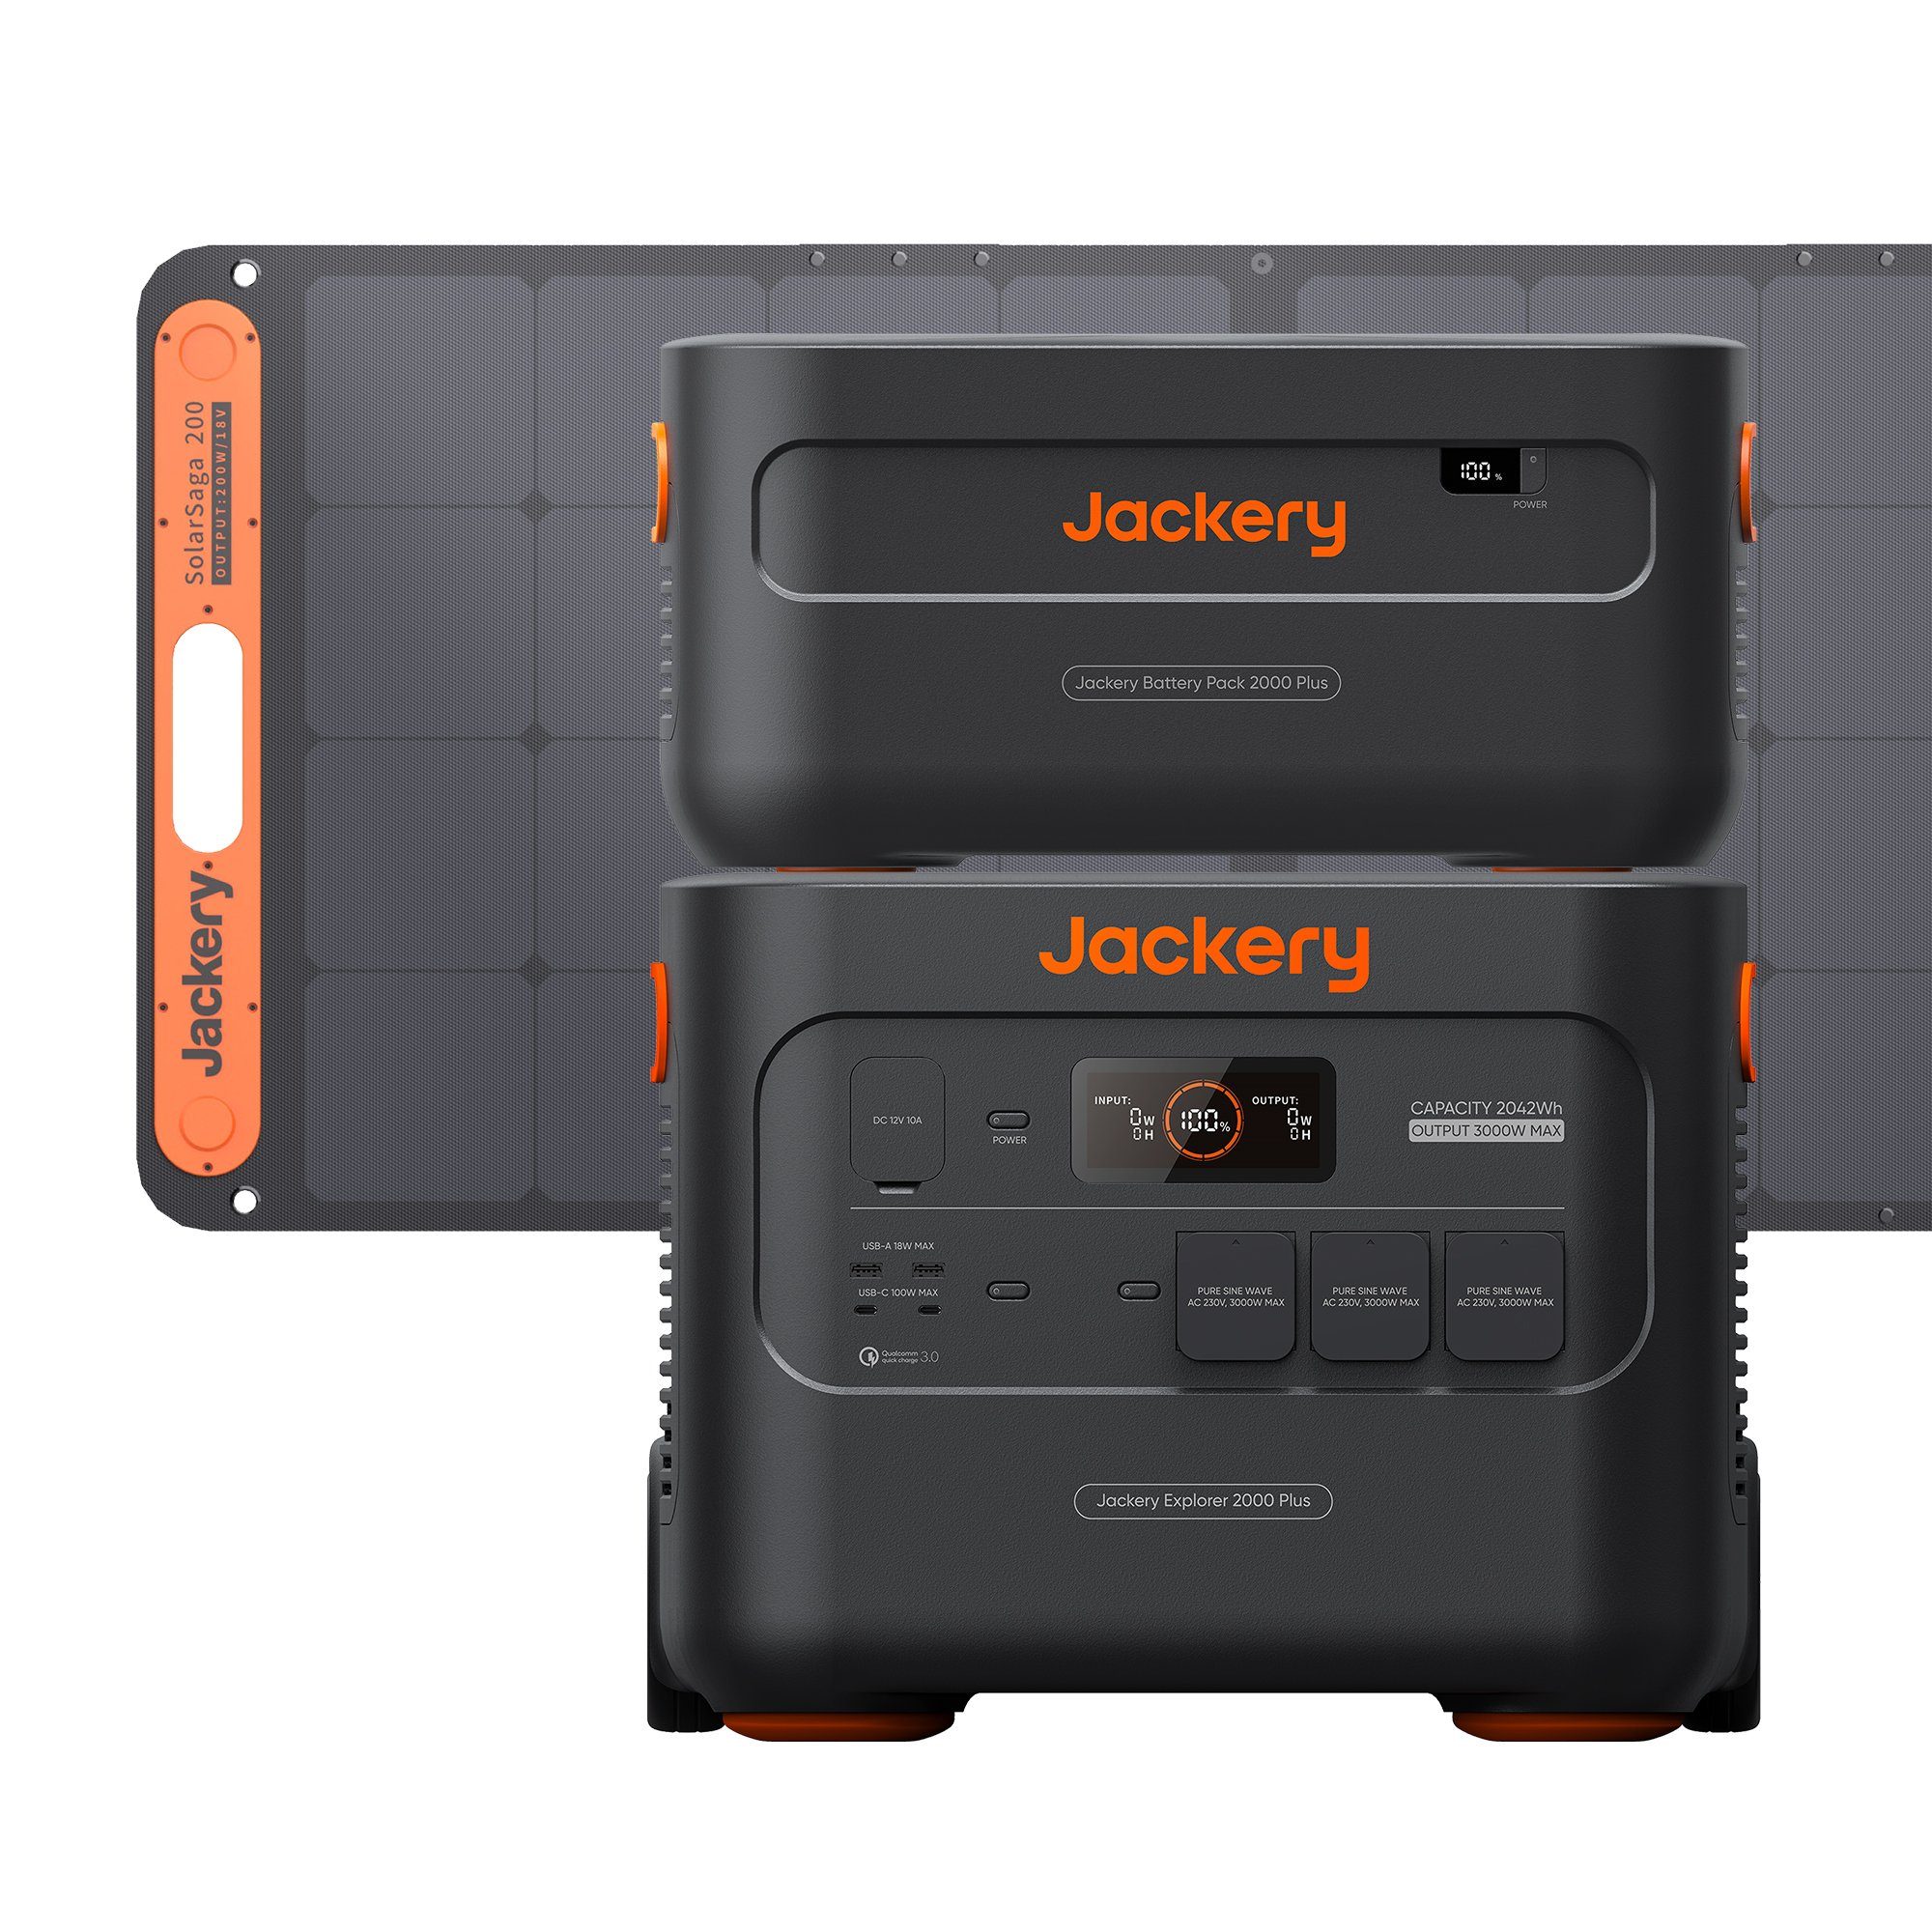 Jackery Stromgenerator Solargenerator 4000 Kit, Explorer 2000 Plus und 1 x Erweiterbarer Akku, mit 1 x 200W Solarmodul